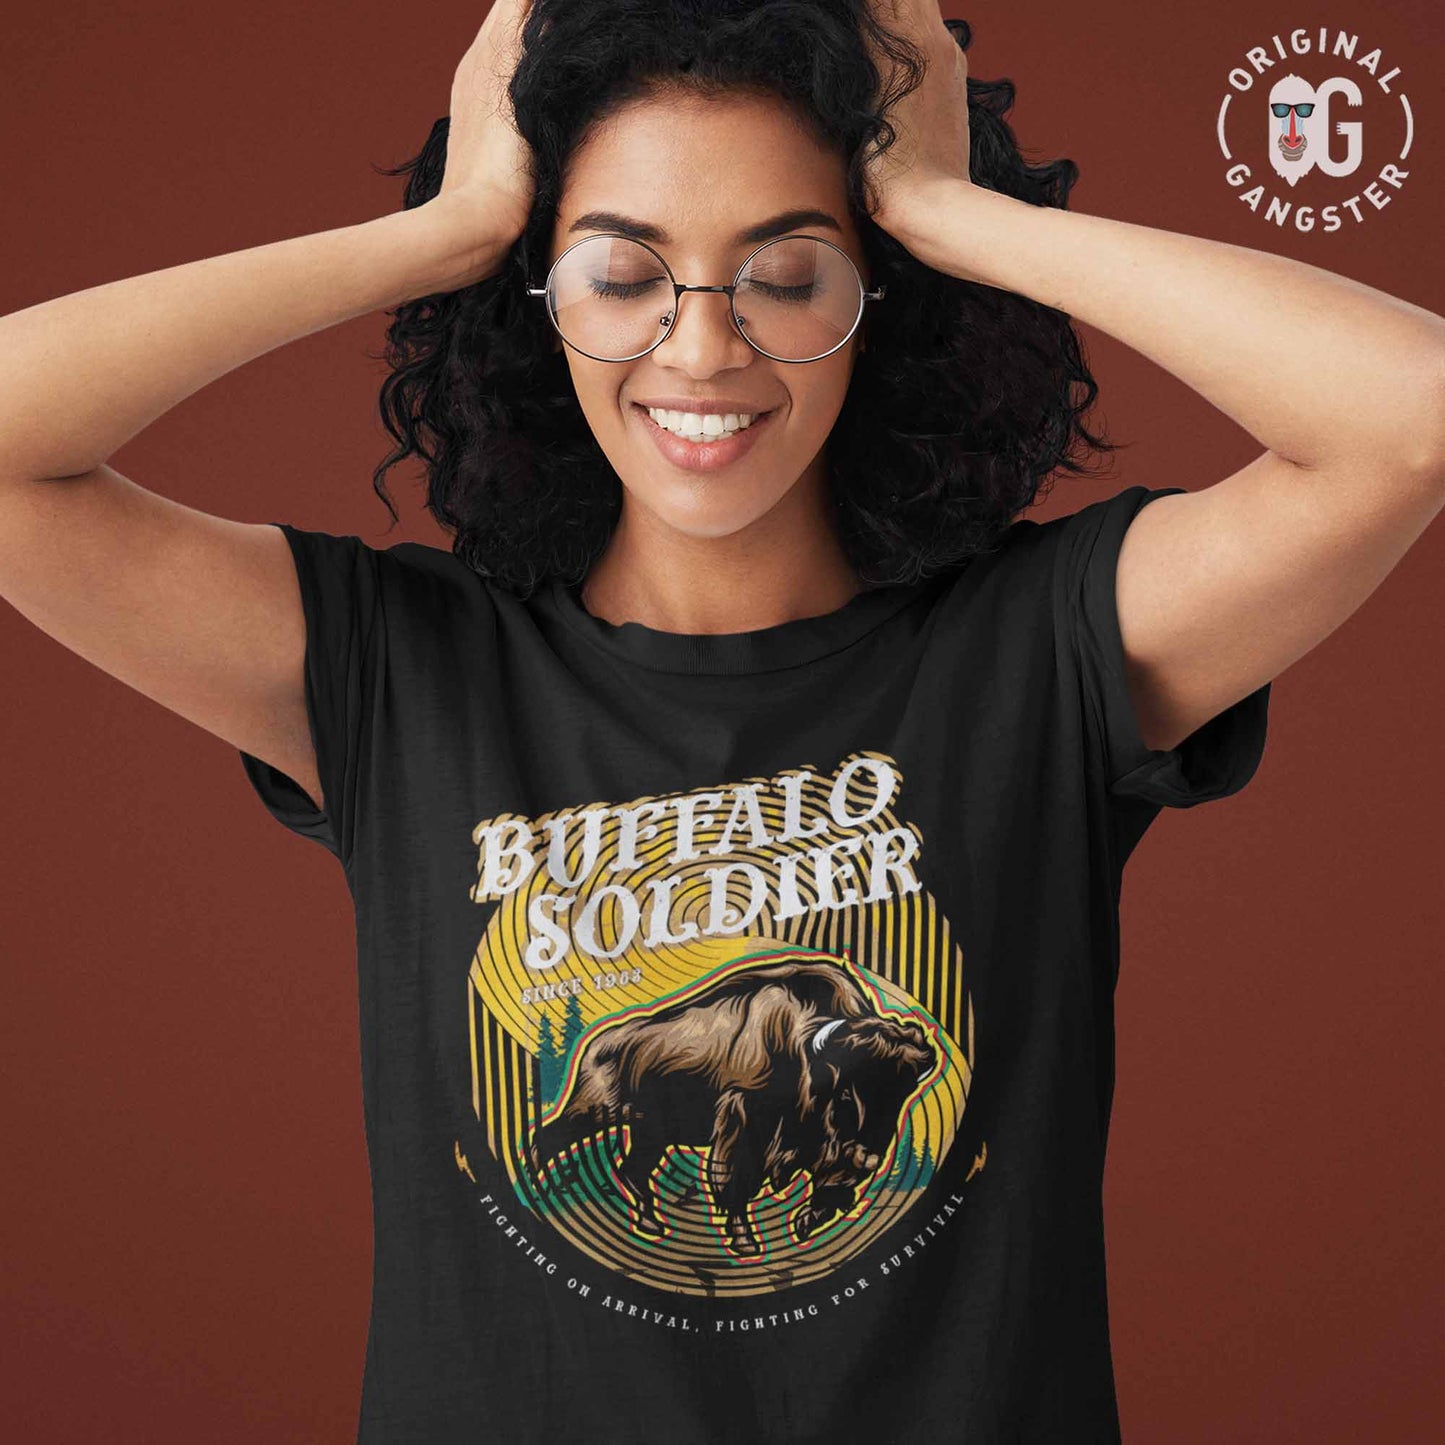 Bob Marley 'Buffalo Soldier' Unisex T-shirt